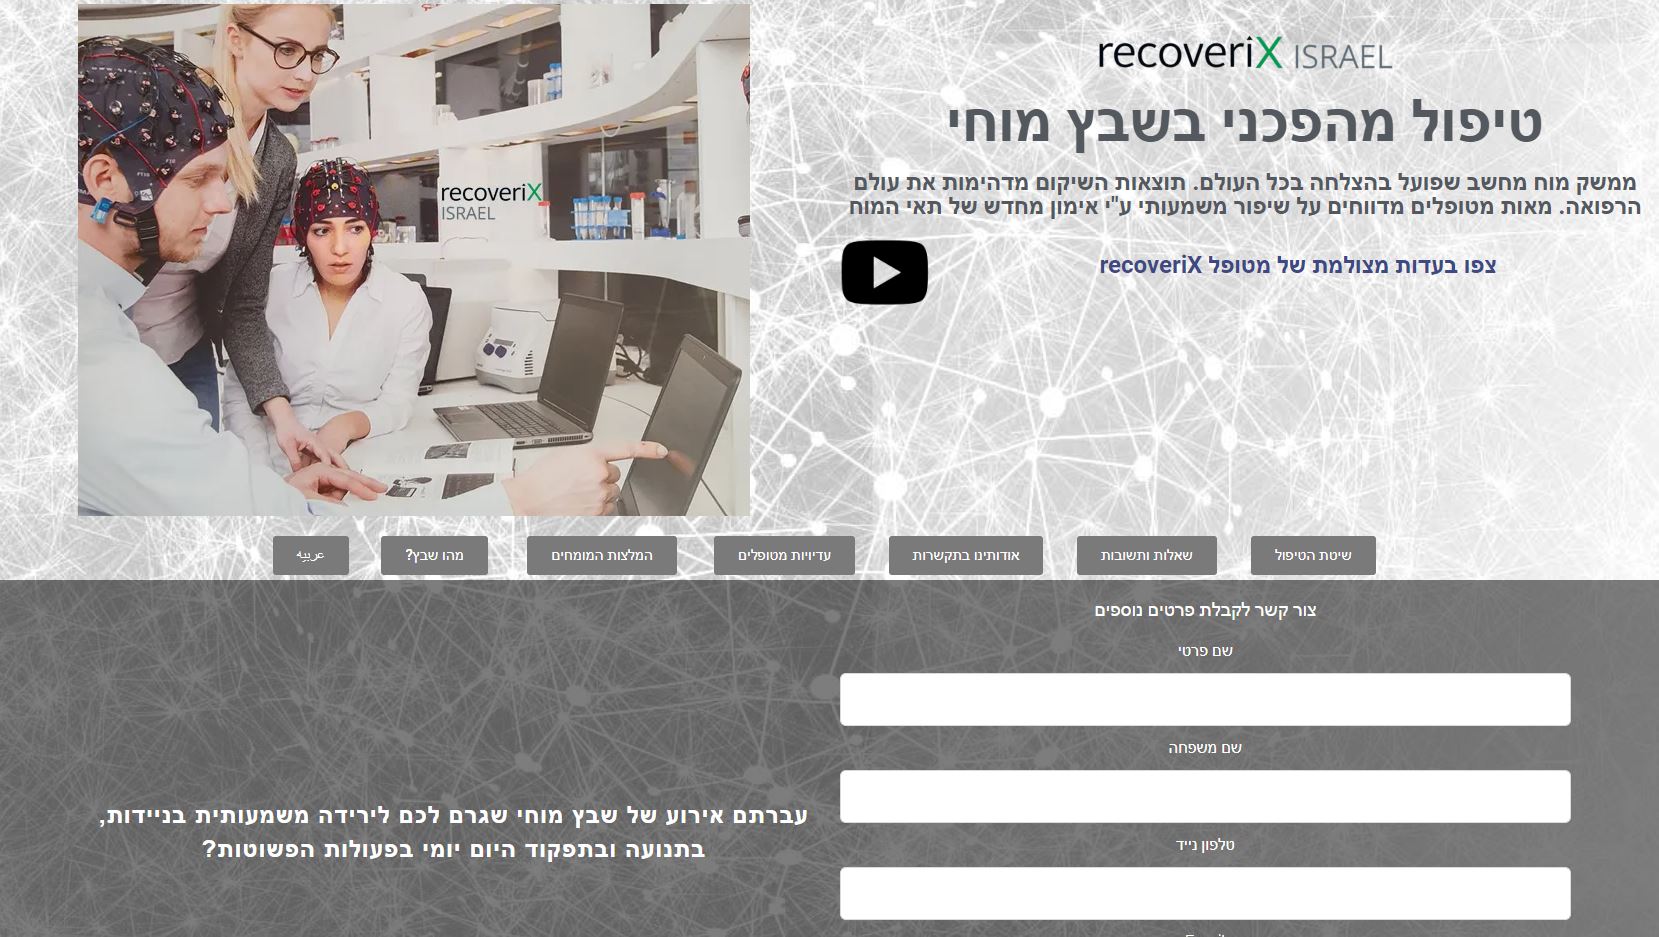 recoverix - Website landing page + Excellent content + Hosting